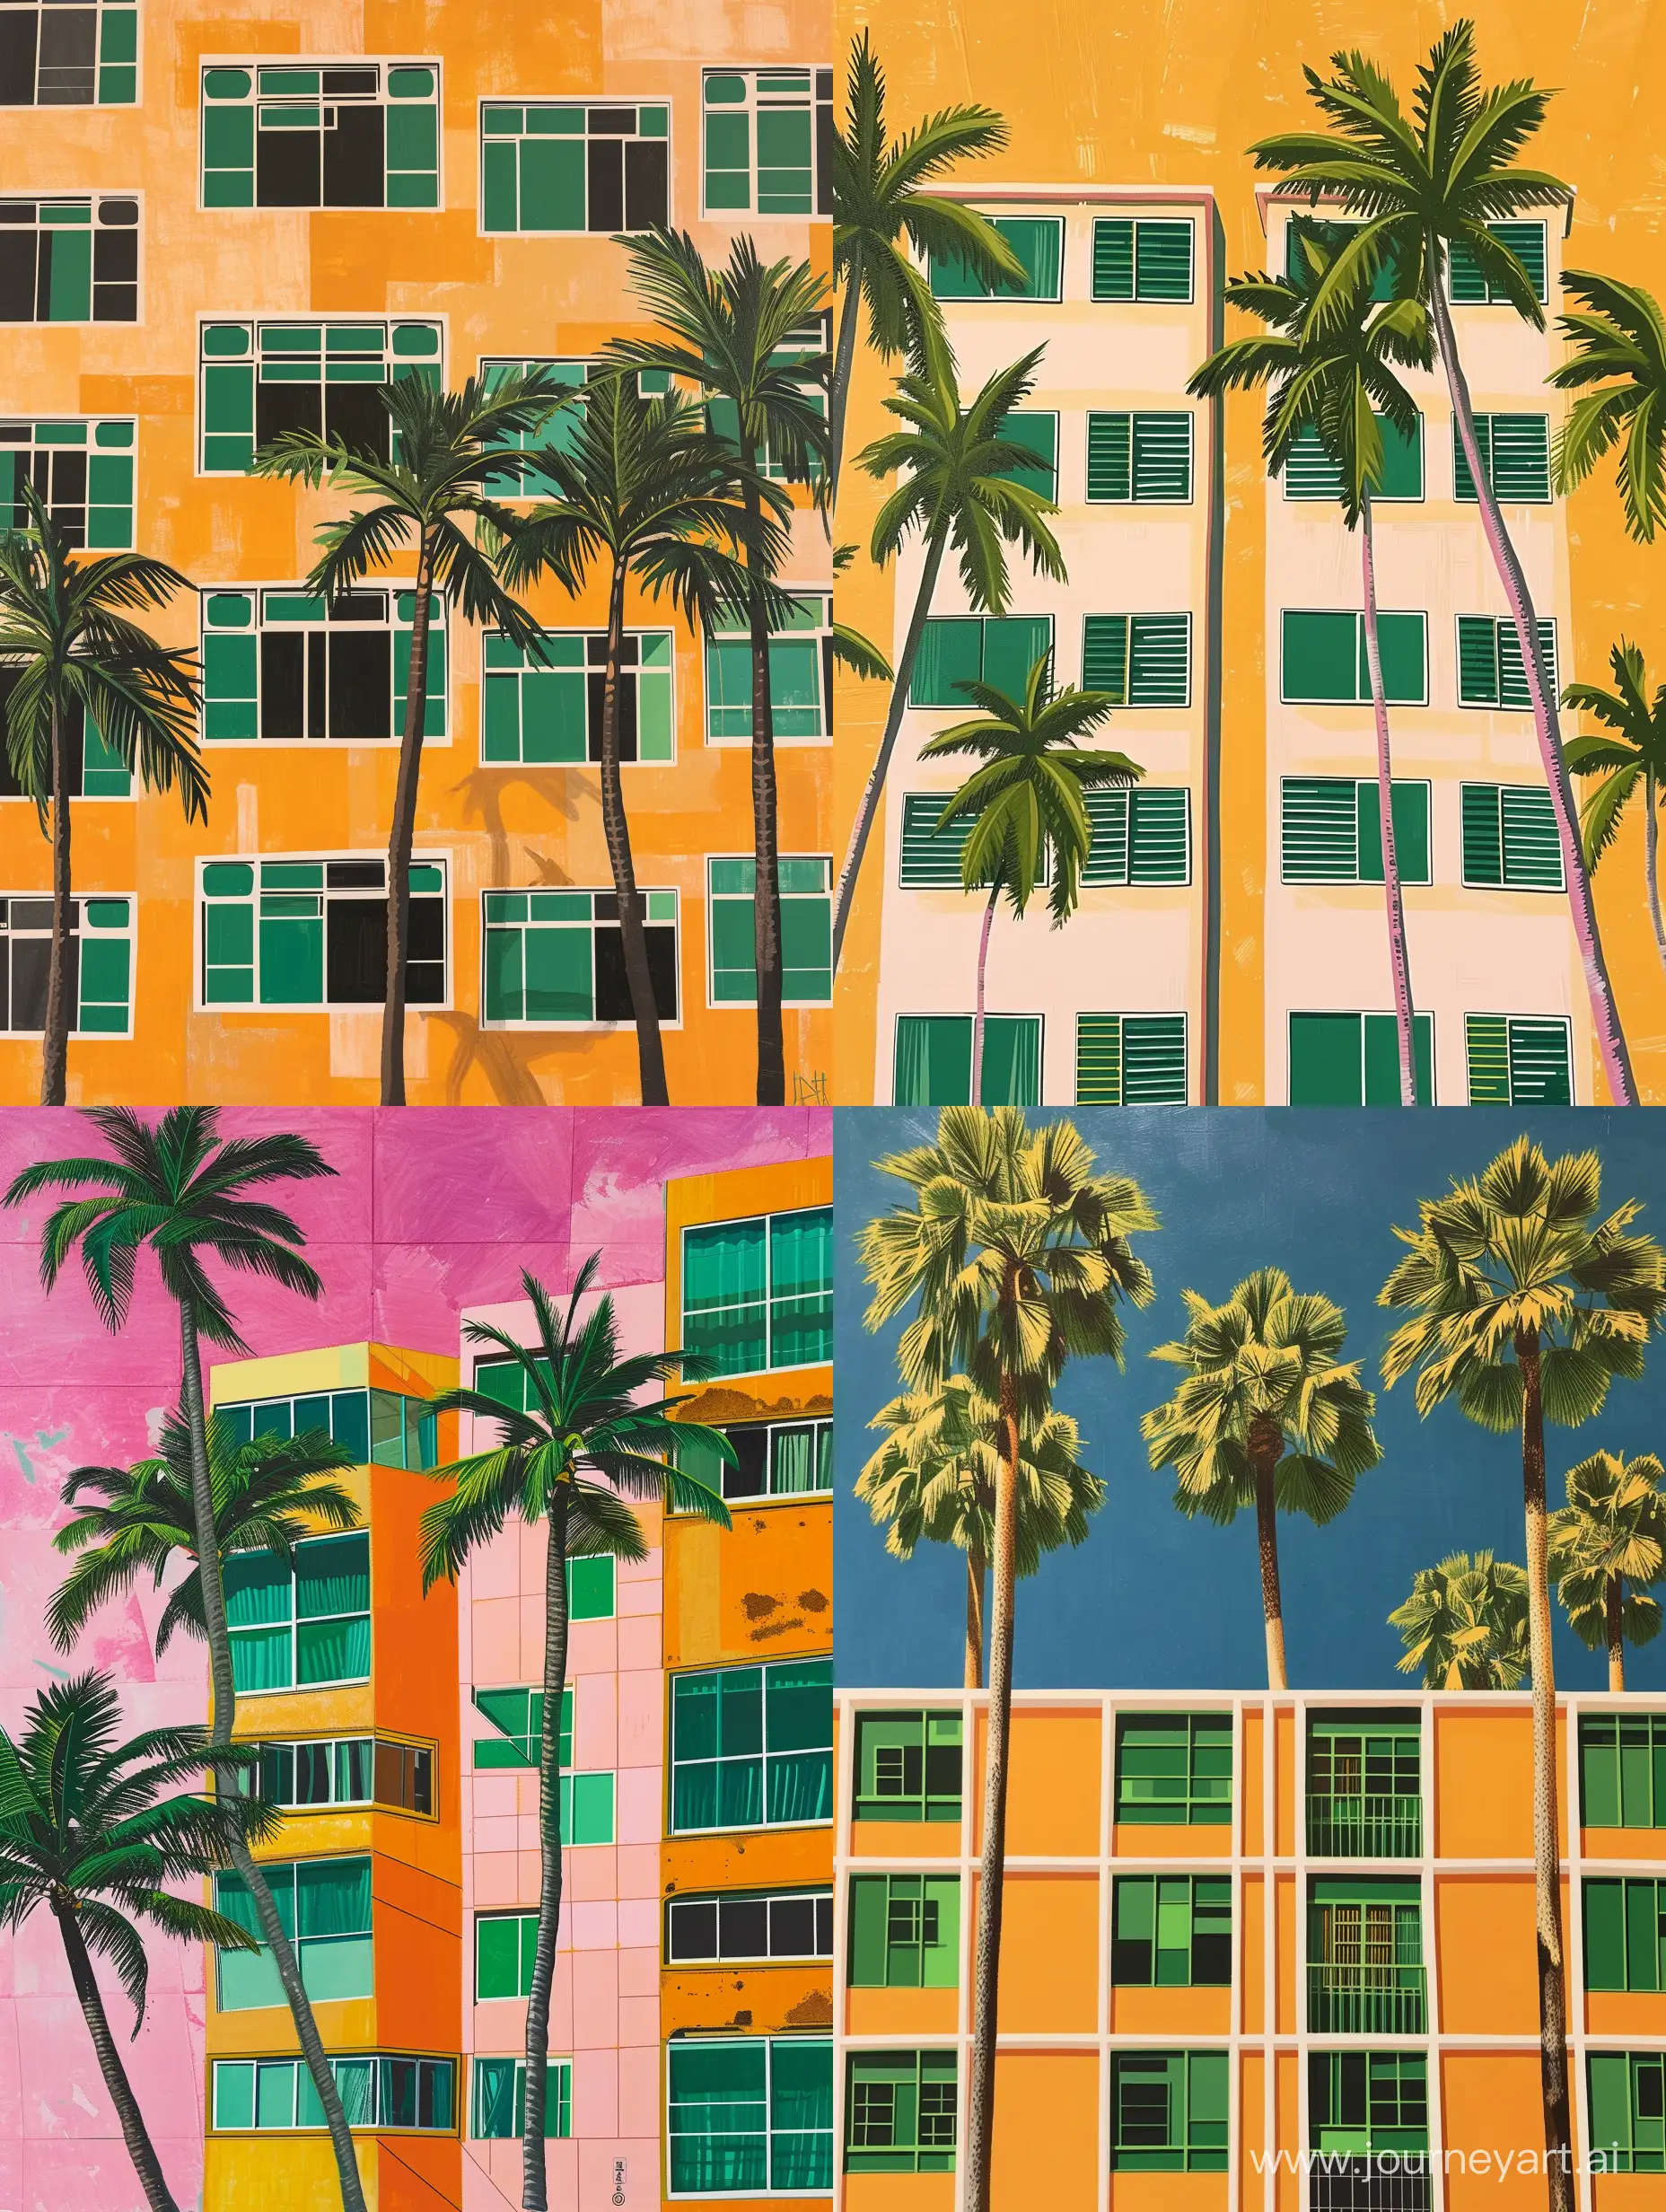 Nostalgic-80s-City-Pop-Beach-Condominium-with-Palm-Trees-and-Green-Windows